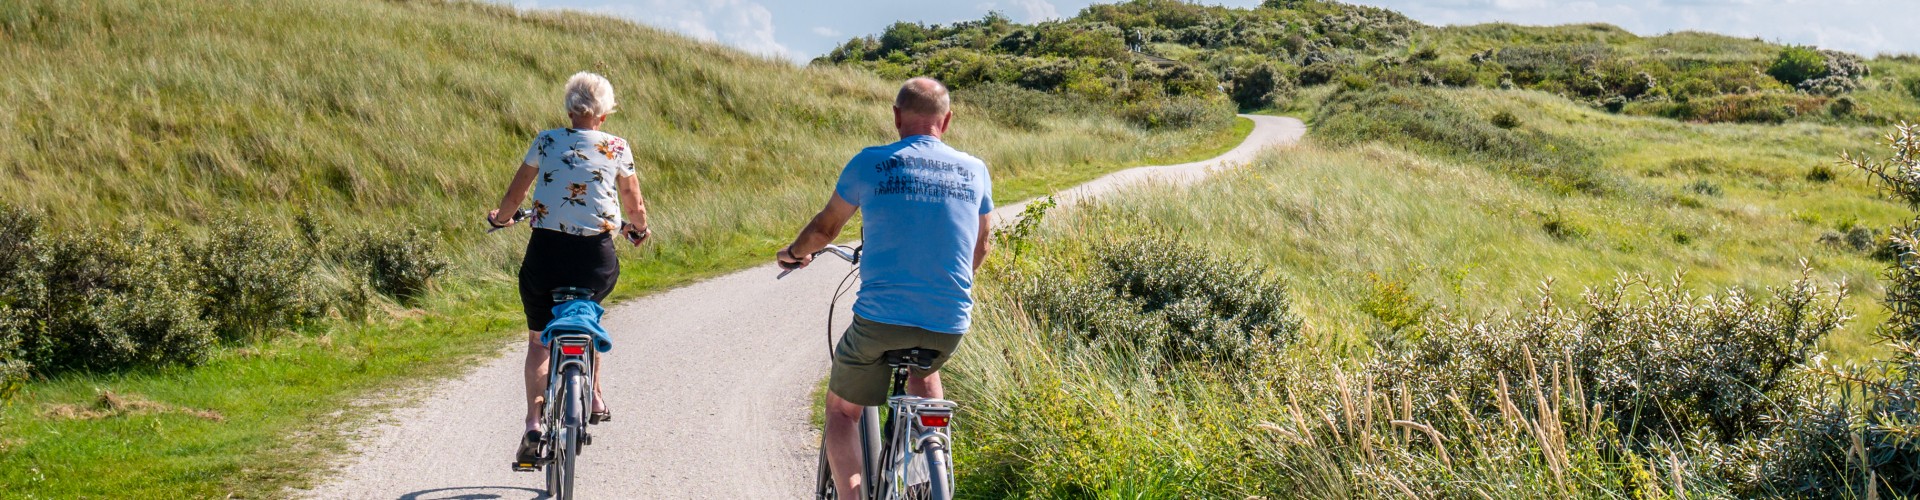 fietsen in de duinen - Zuiderduin